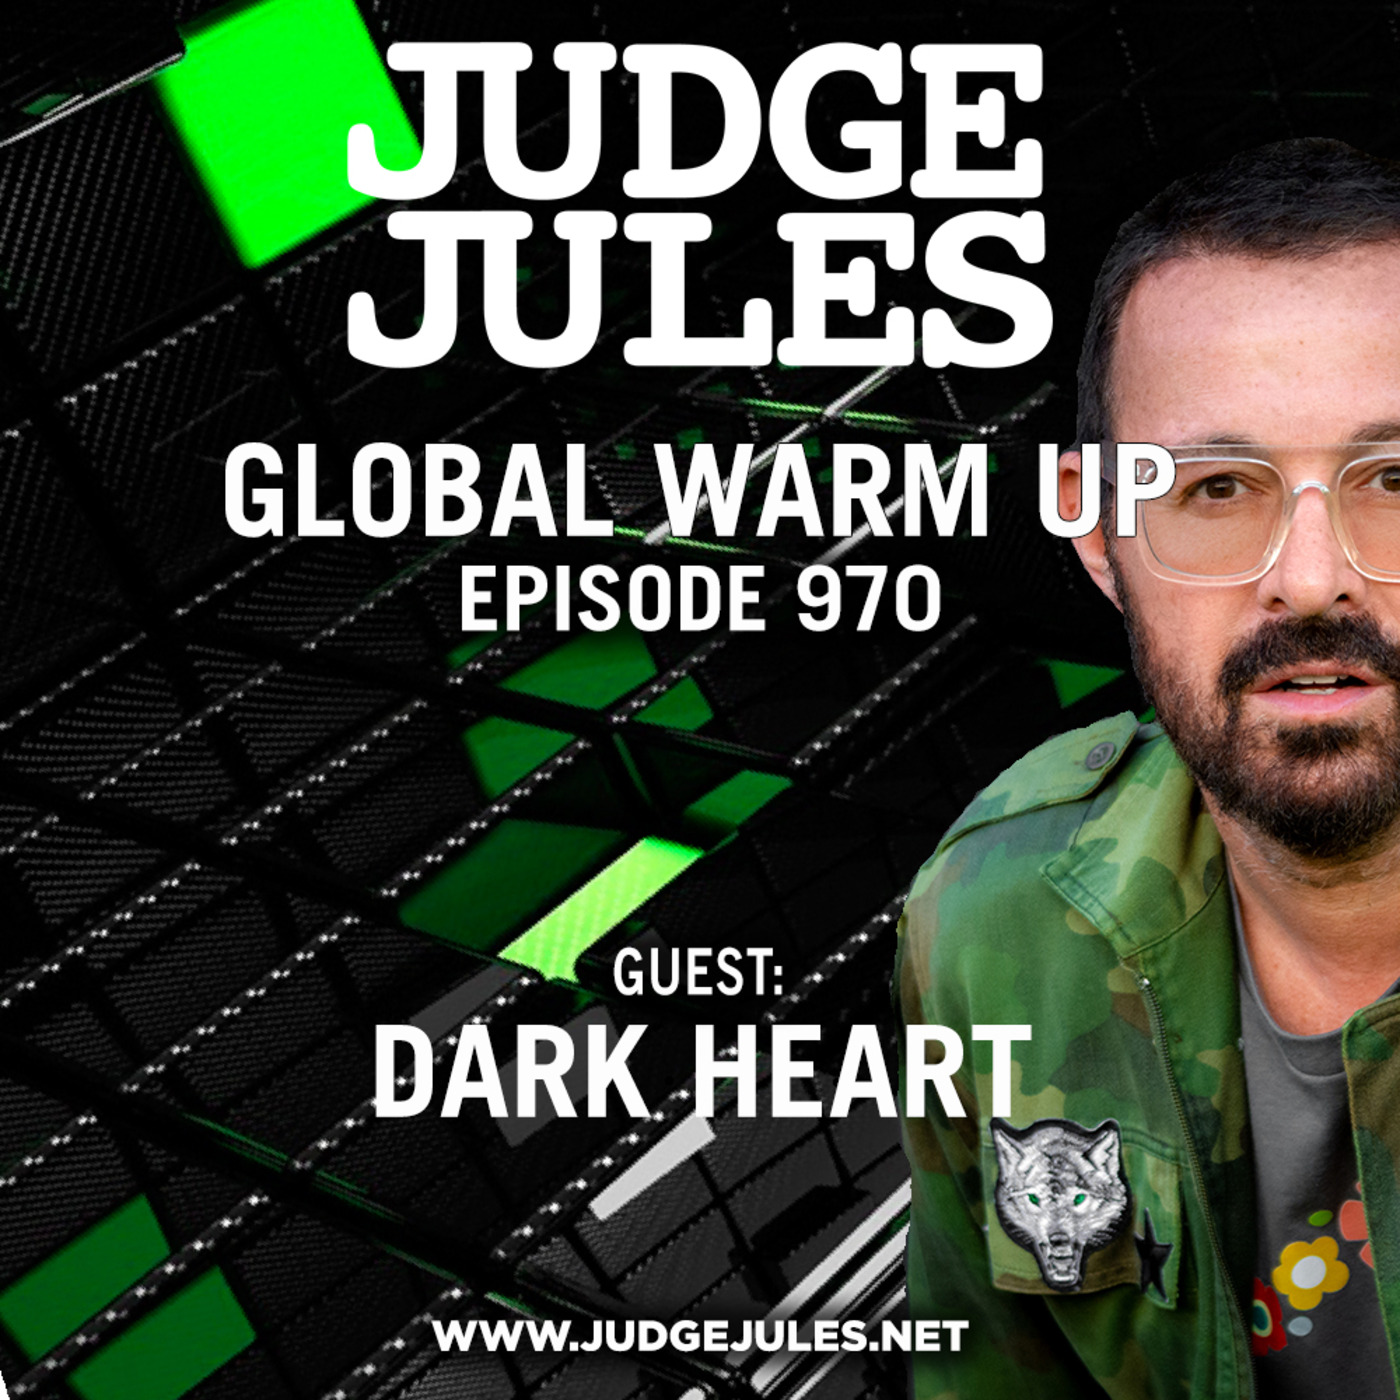 Episode 970: JUDGE JULES PRESENTS THE GLOBAL WARM UP EPISODE 970